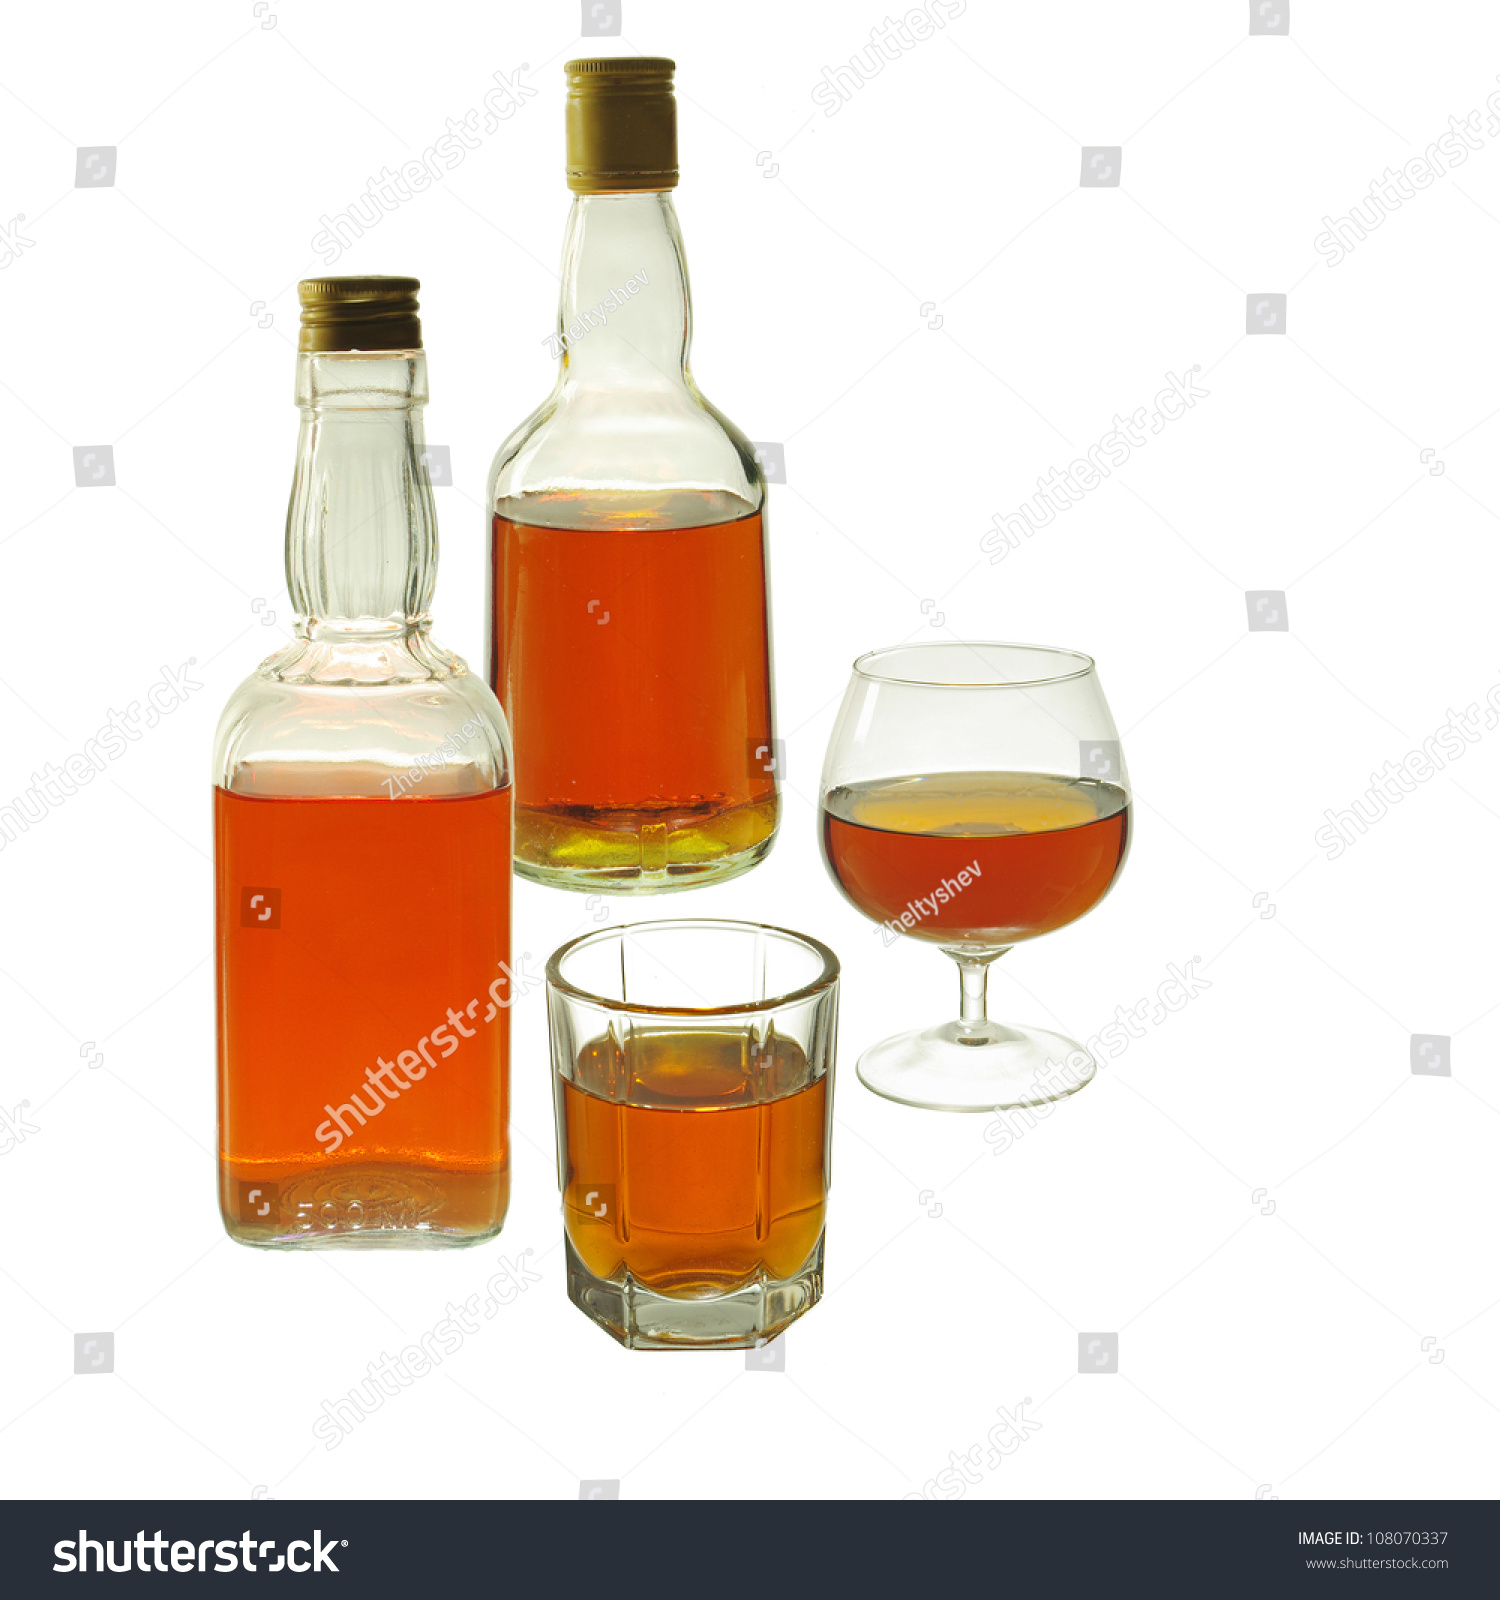 Whiskey Bottles and Glasses. Isolated on white background #108070337